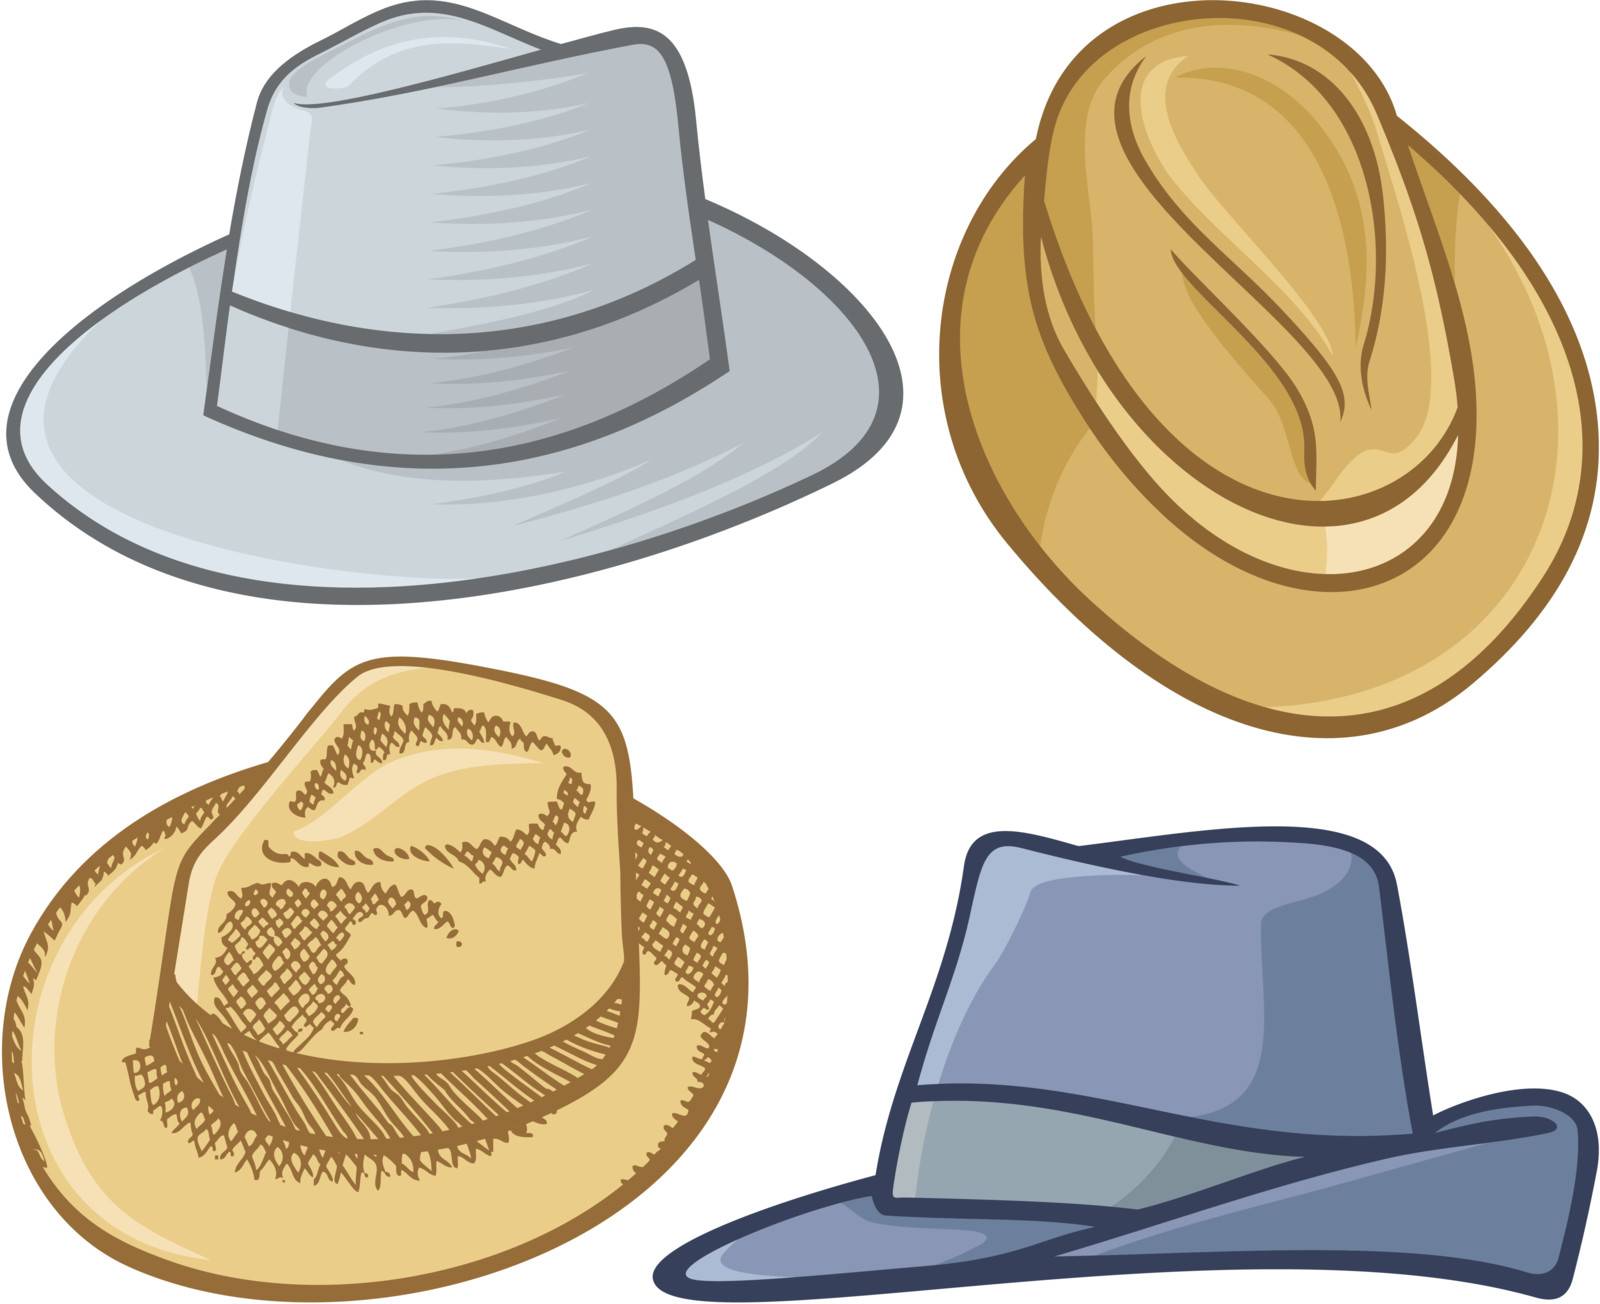 Four fedora hat illustrations isolated on white.